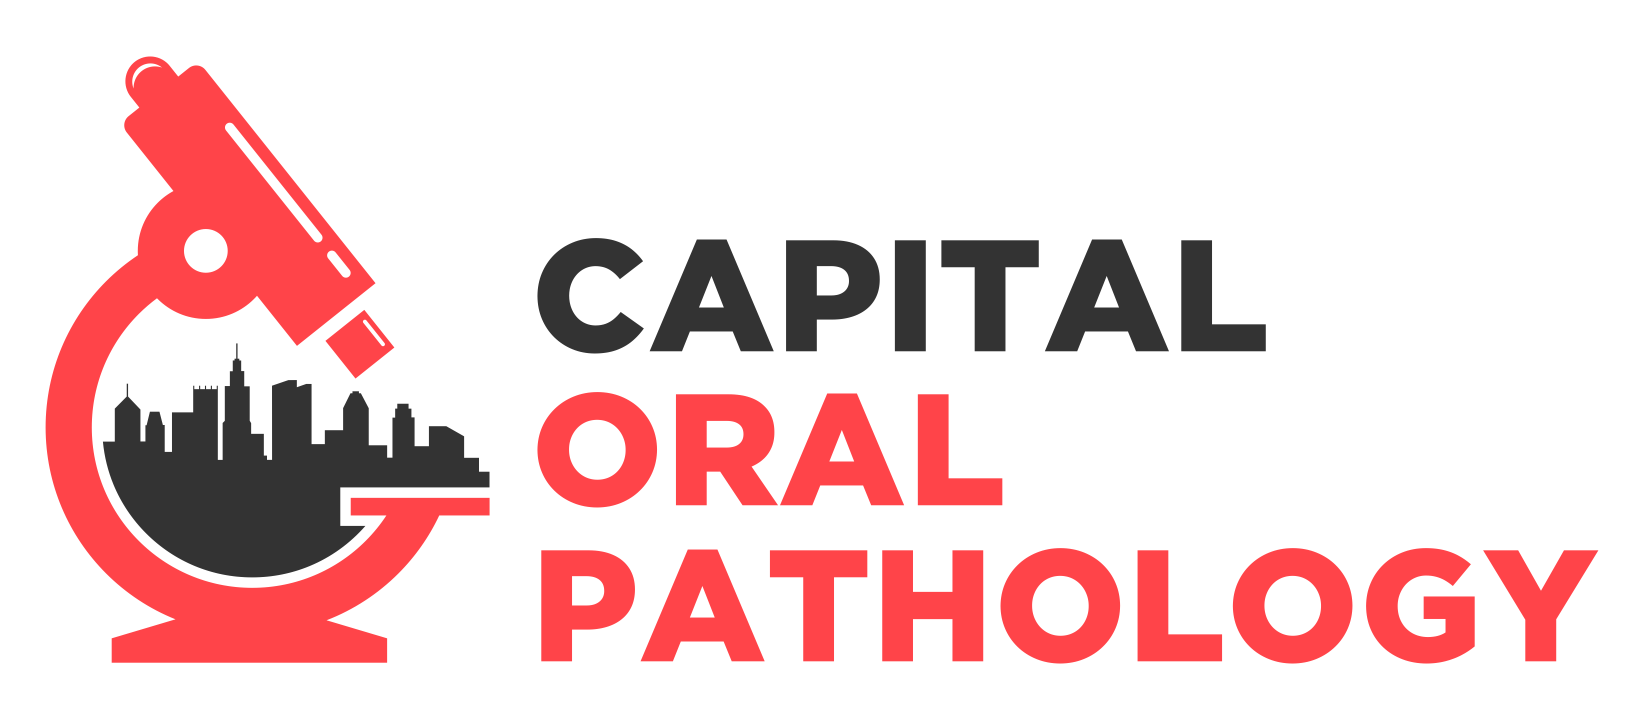 Capital Oral Pathology